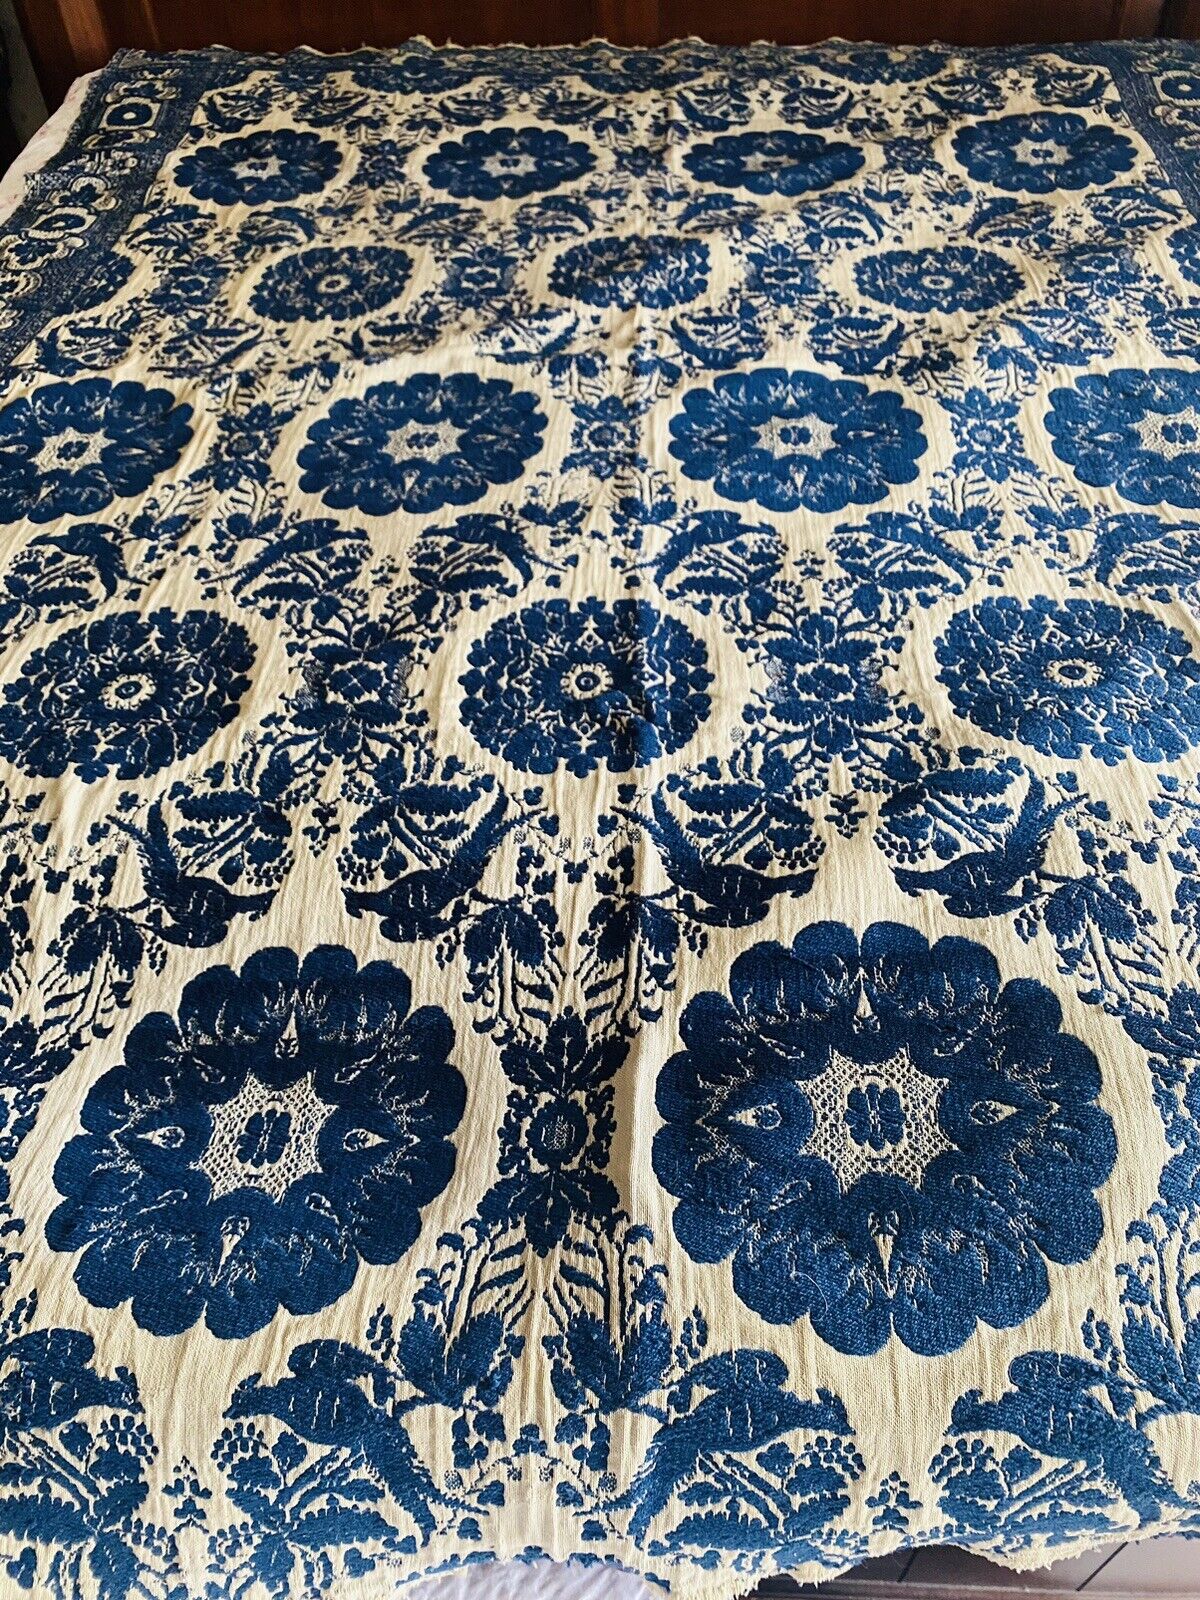 Antique Overshot Jacquard Blue Appalachian Southern Handmade Woven Coverlet